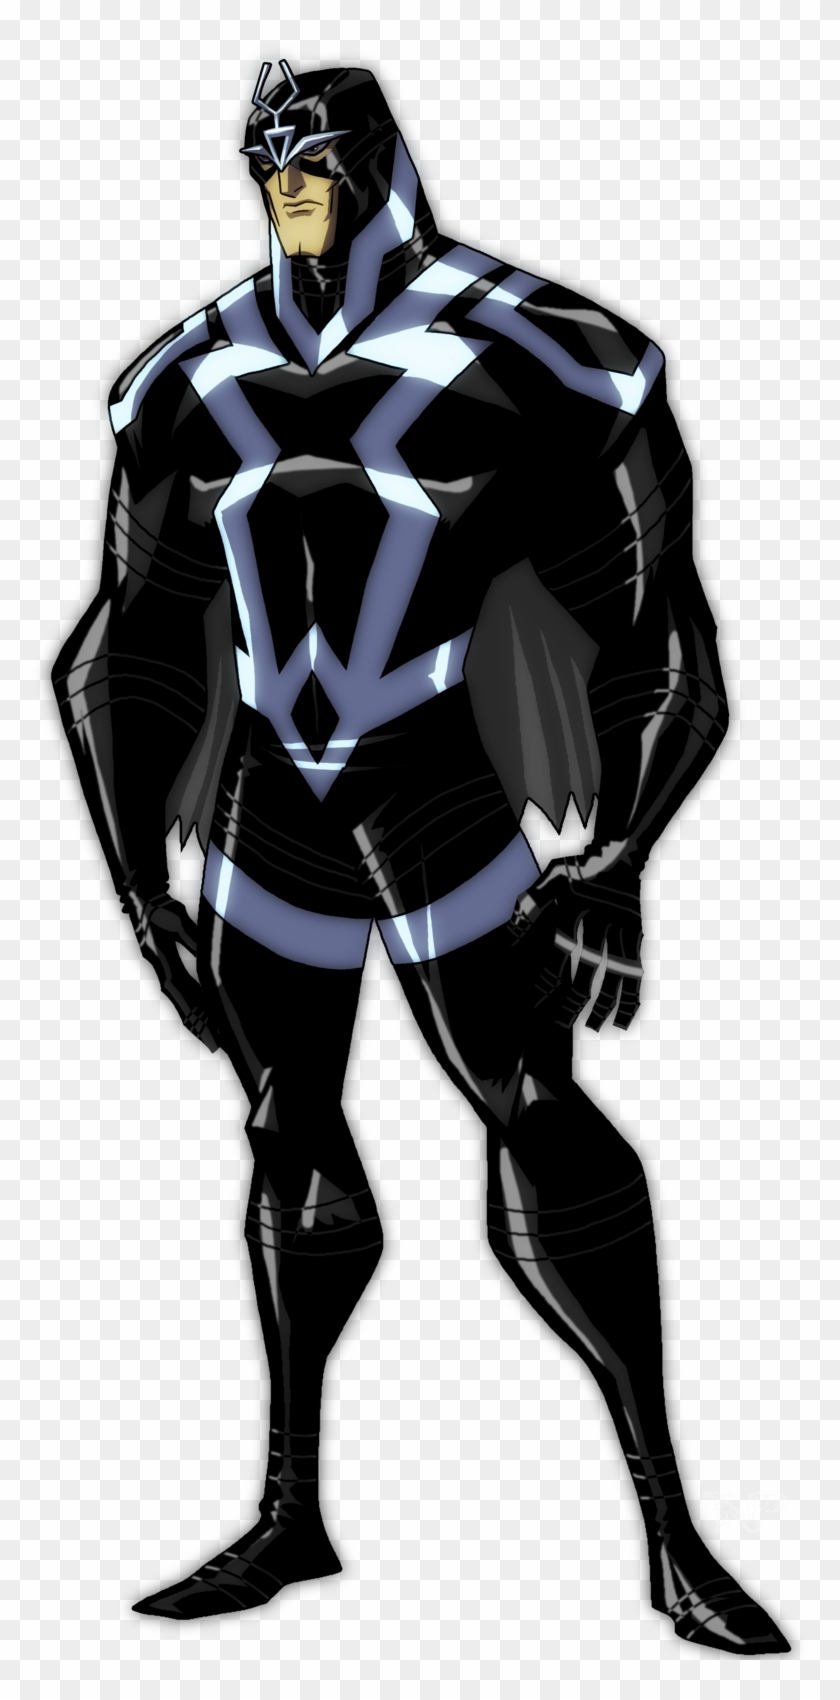 Blackbolt By Thomas Perkins - Marvel Heroes Black Bolt #1138287